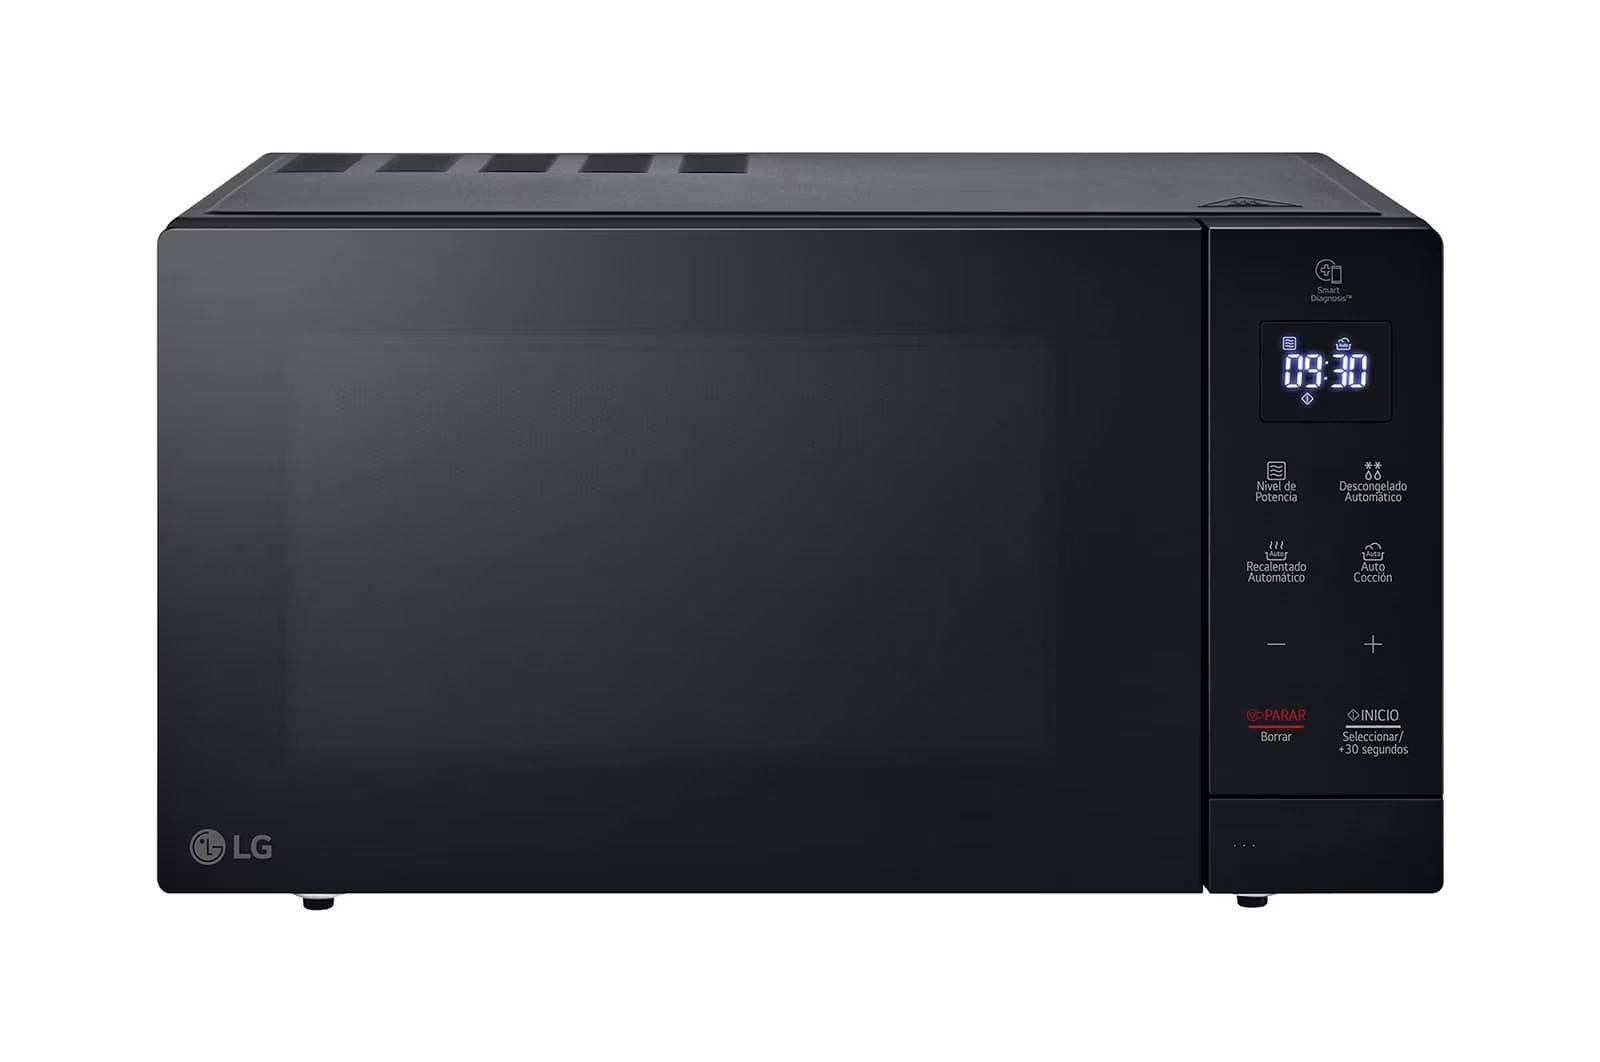 LG Microwave NeoChef, 30L, Black, MS3032JAS